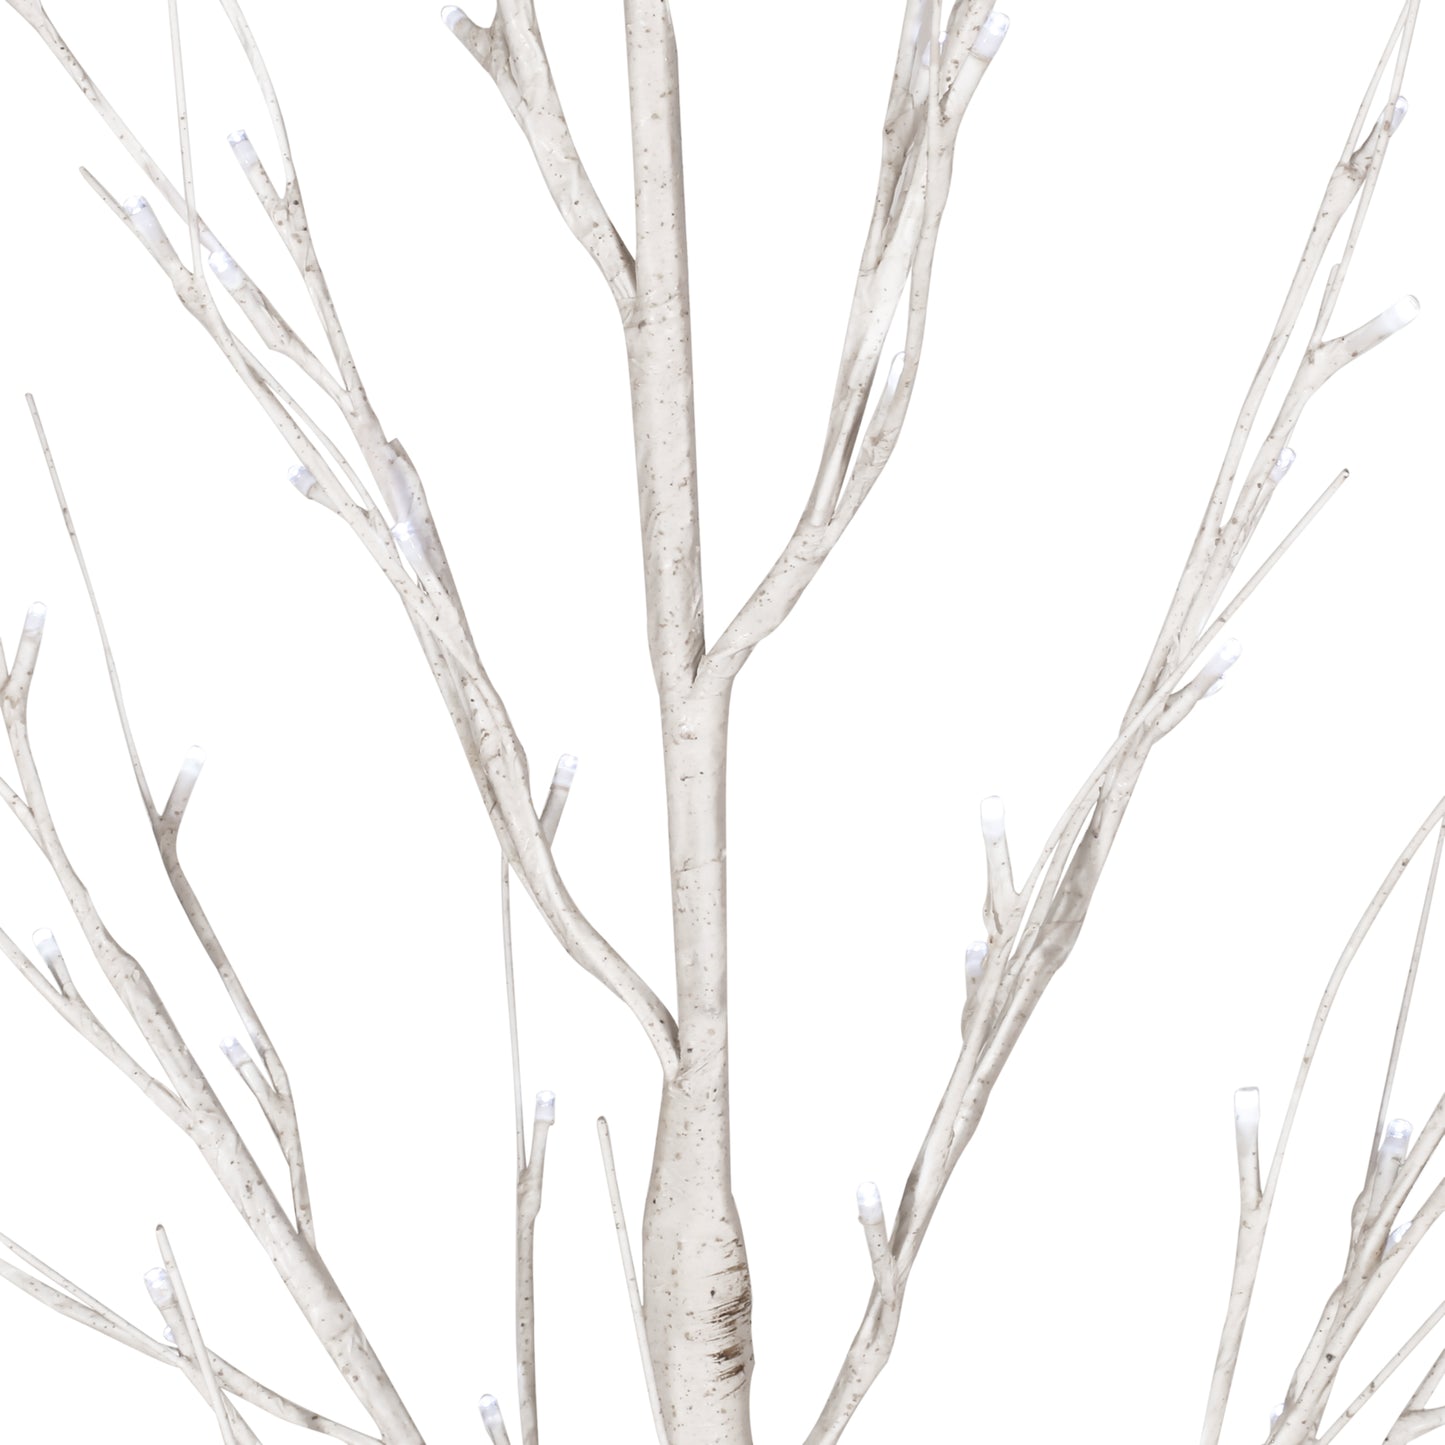 Bolton 6-Foot Pre-Lit 96 White LED Artificial Twig Birch Tree, White